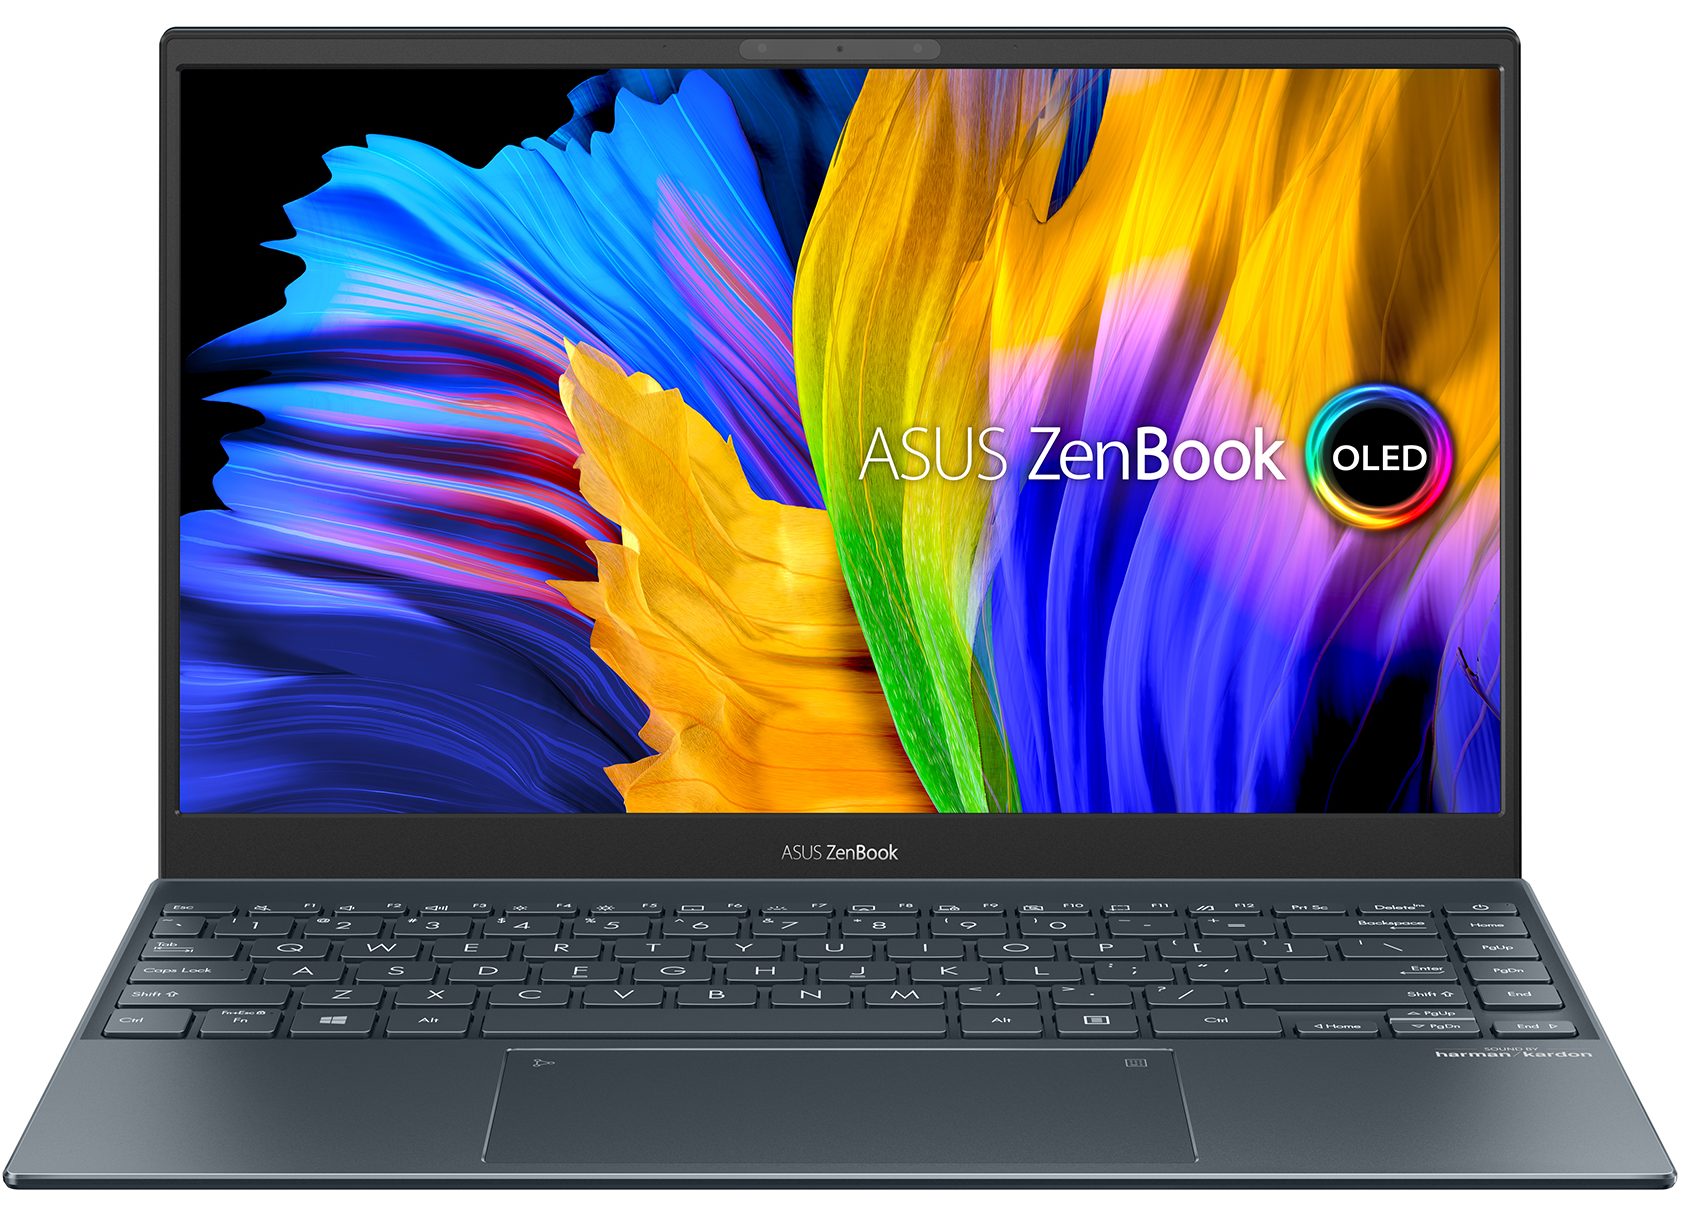 Asus Zenbook 13 (UX325) OLED review